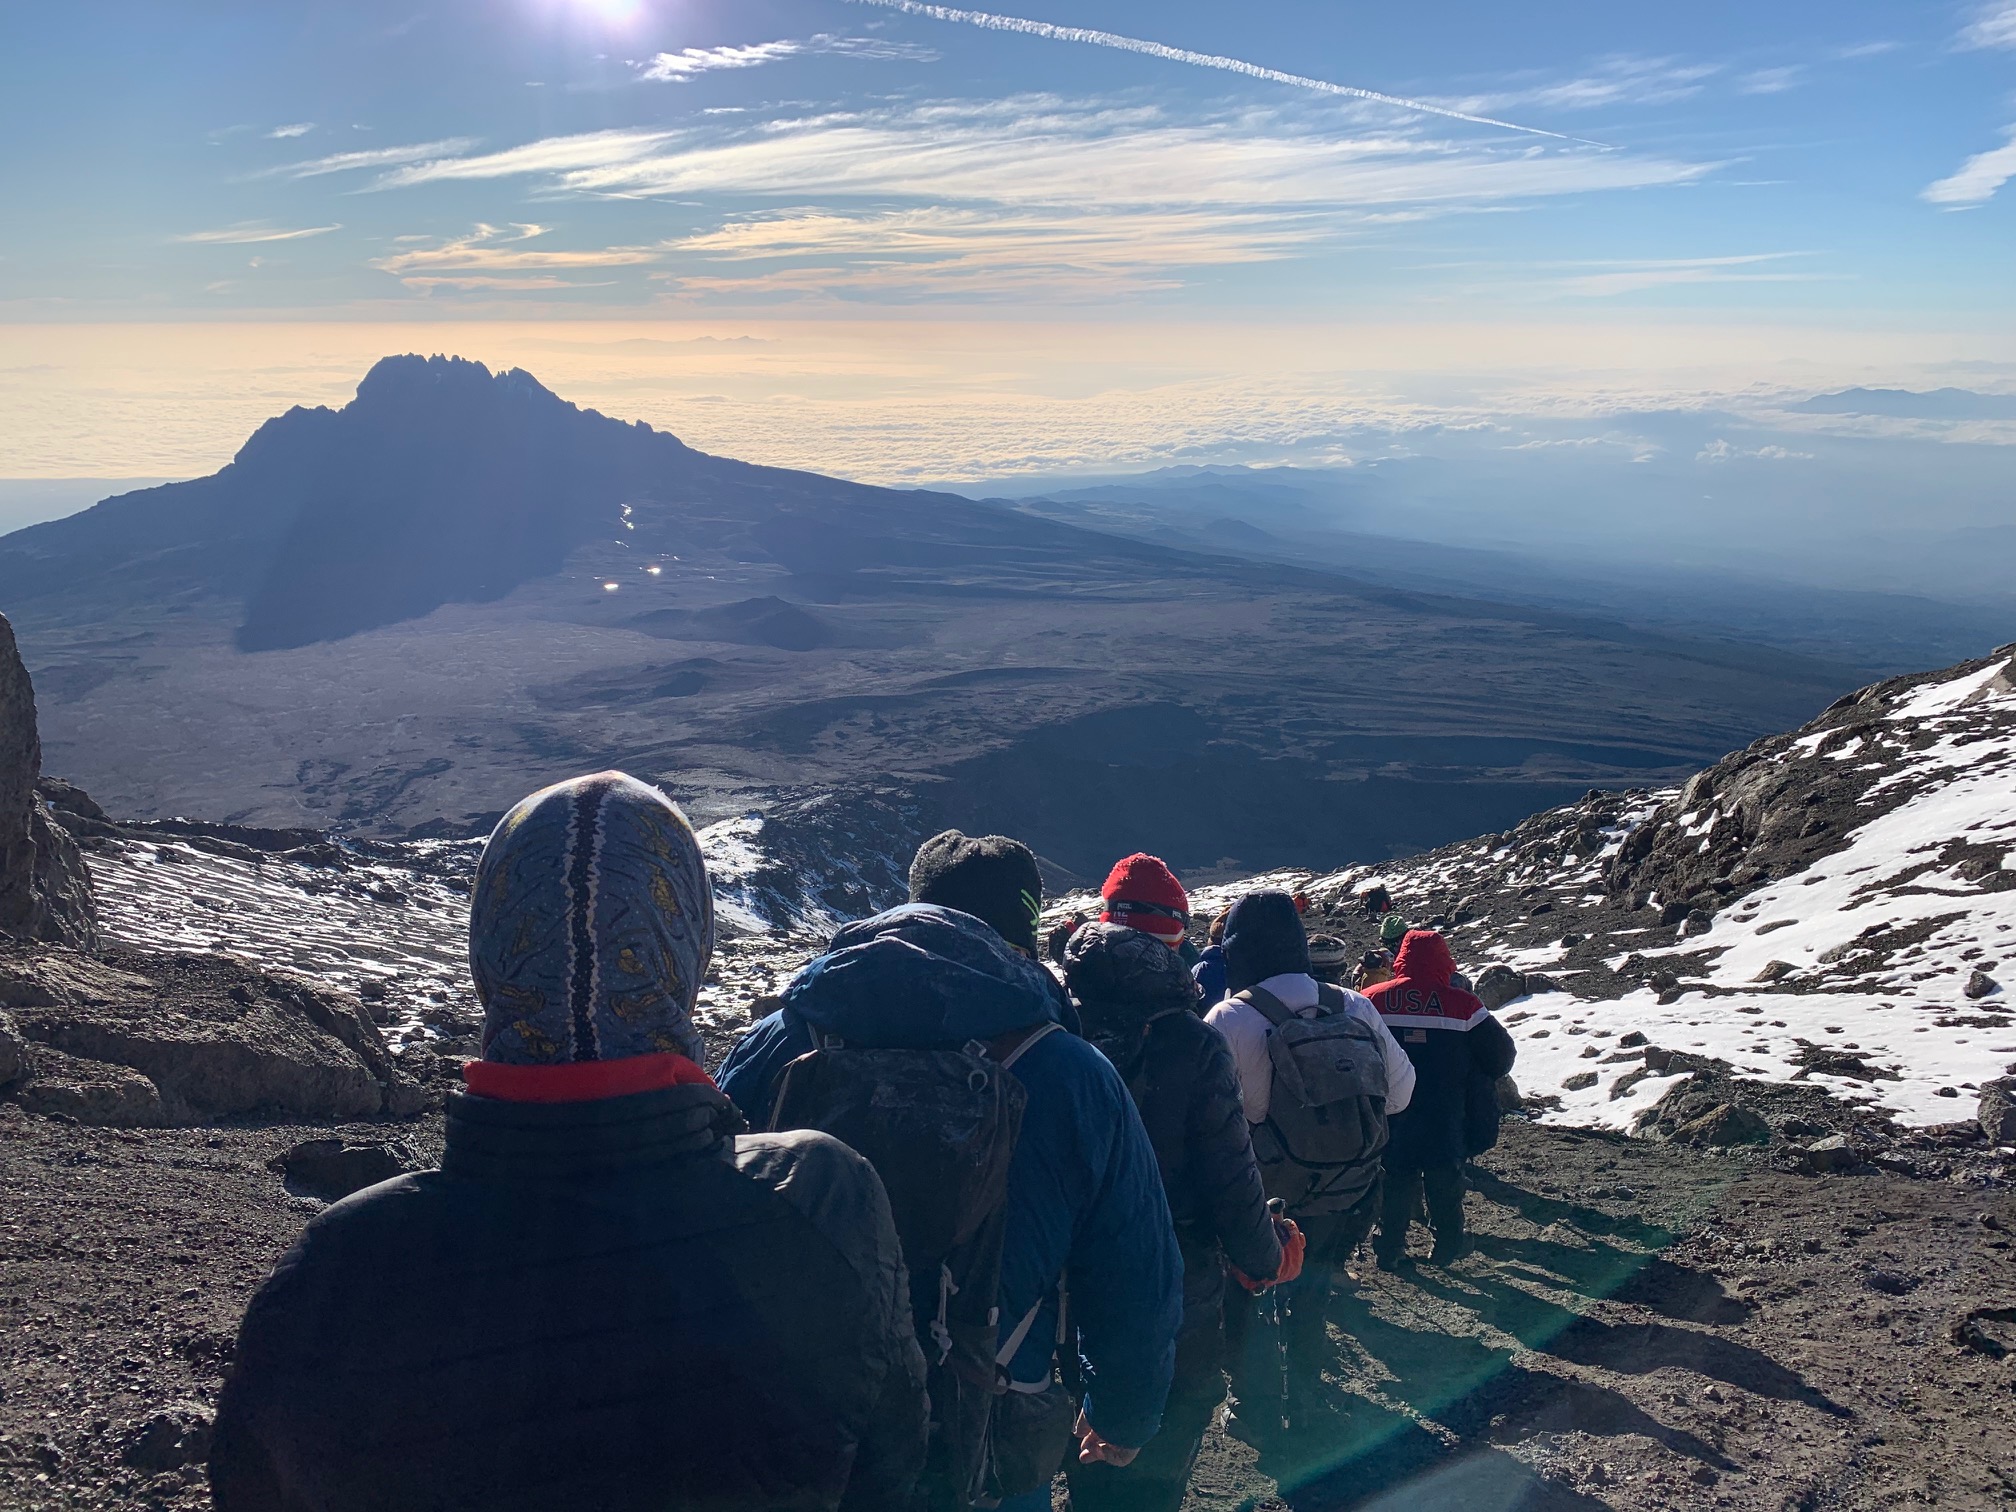 Beautiful views on the way down Kilimanjaro